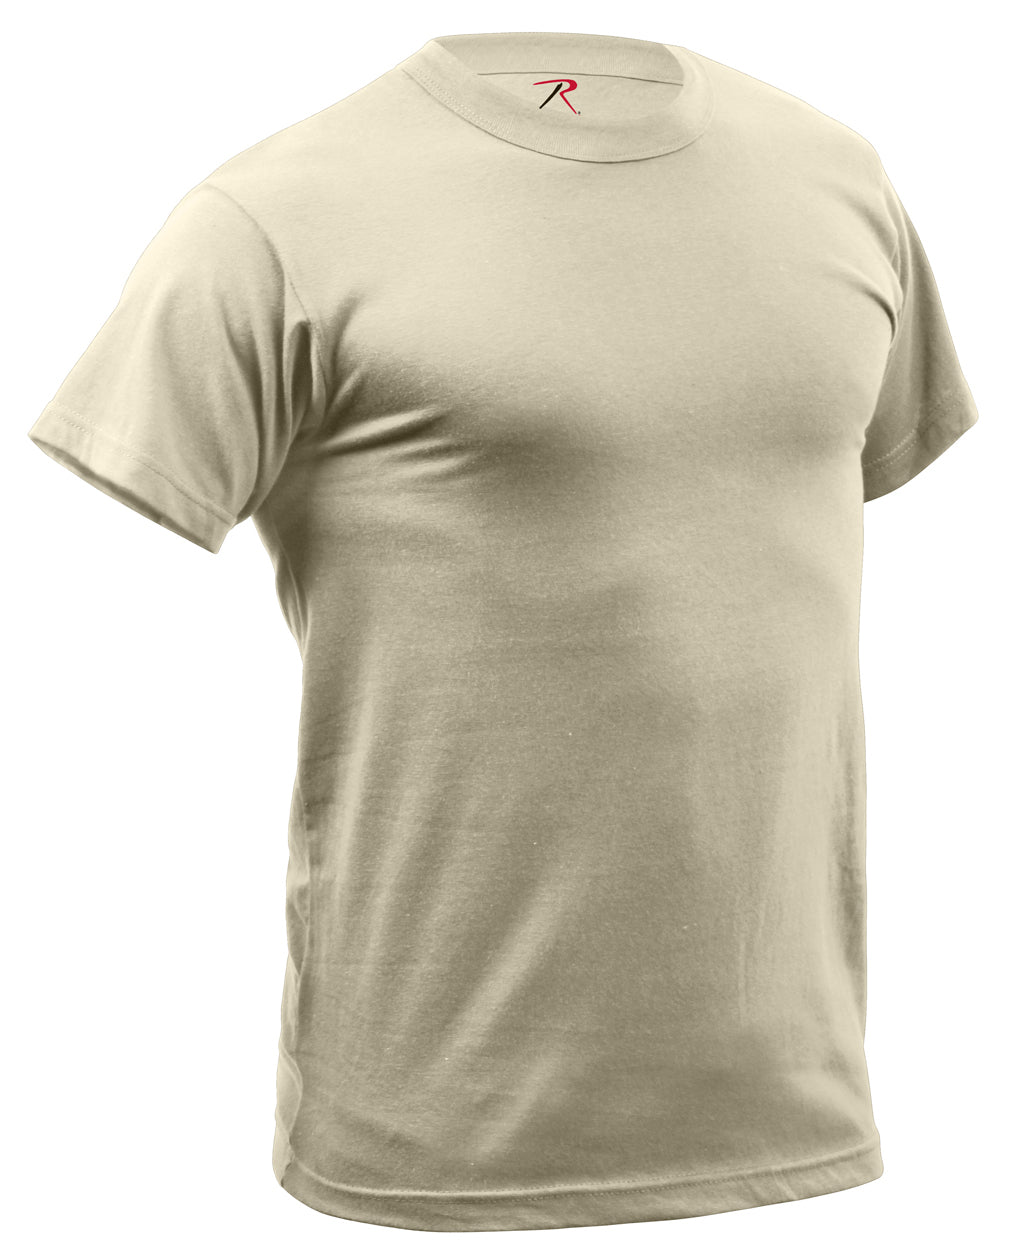 [AR 670-1] Poly Quick Dry Moisture Wicking T-Shirts Desert Sand